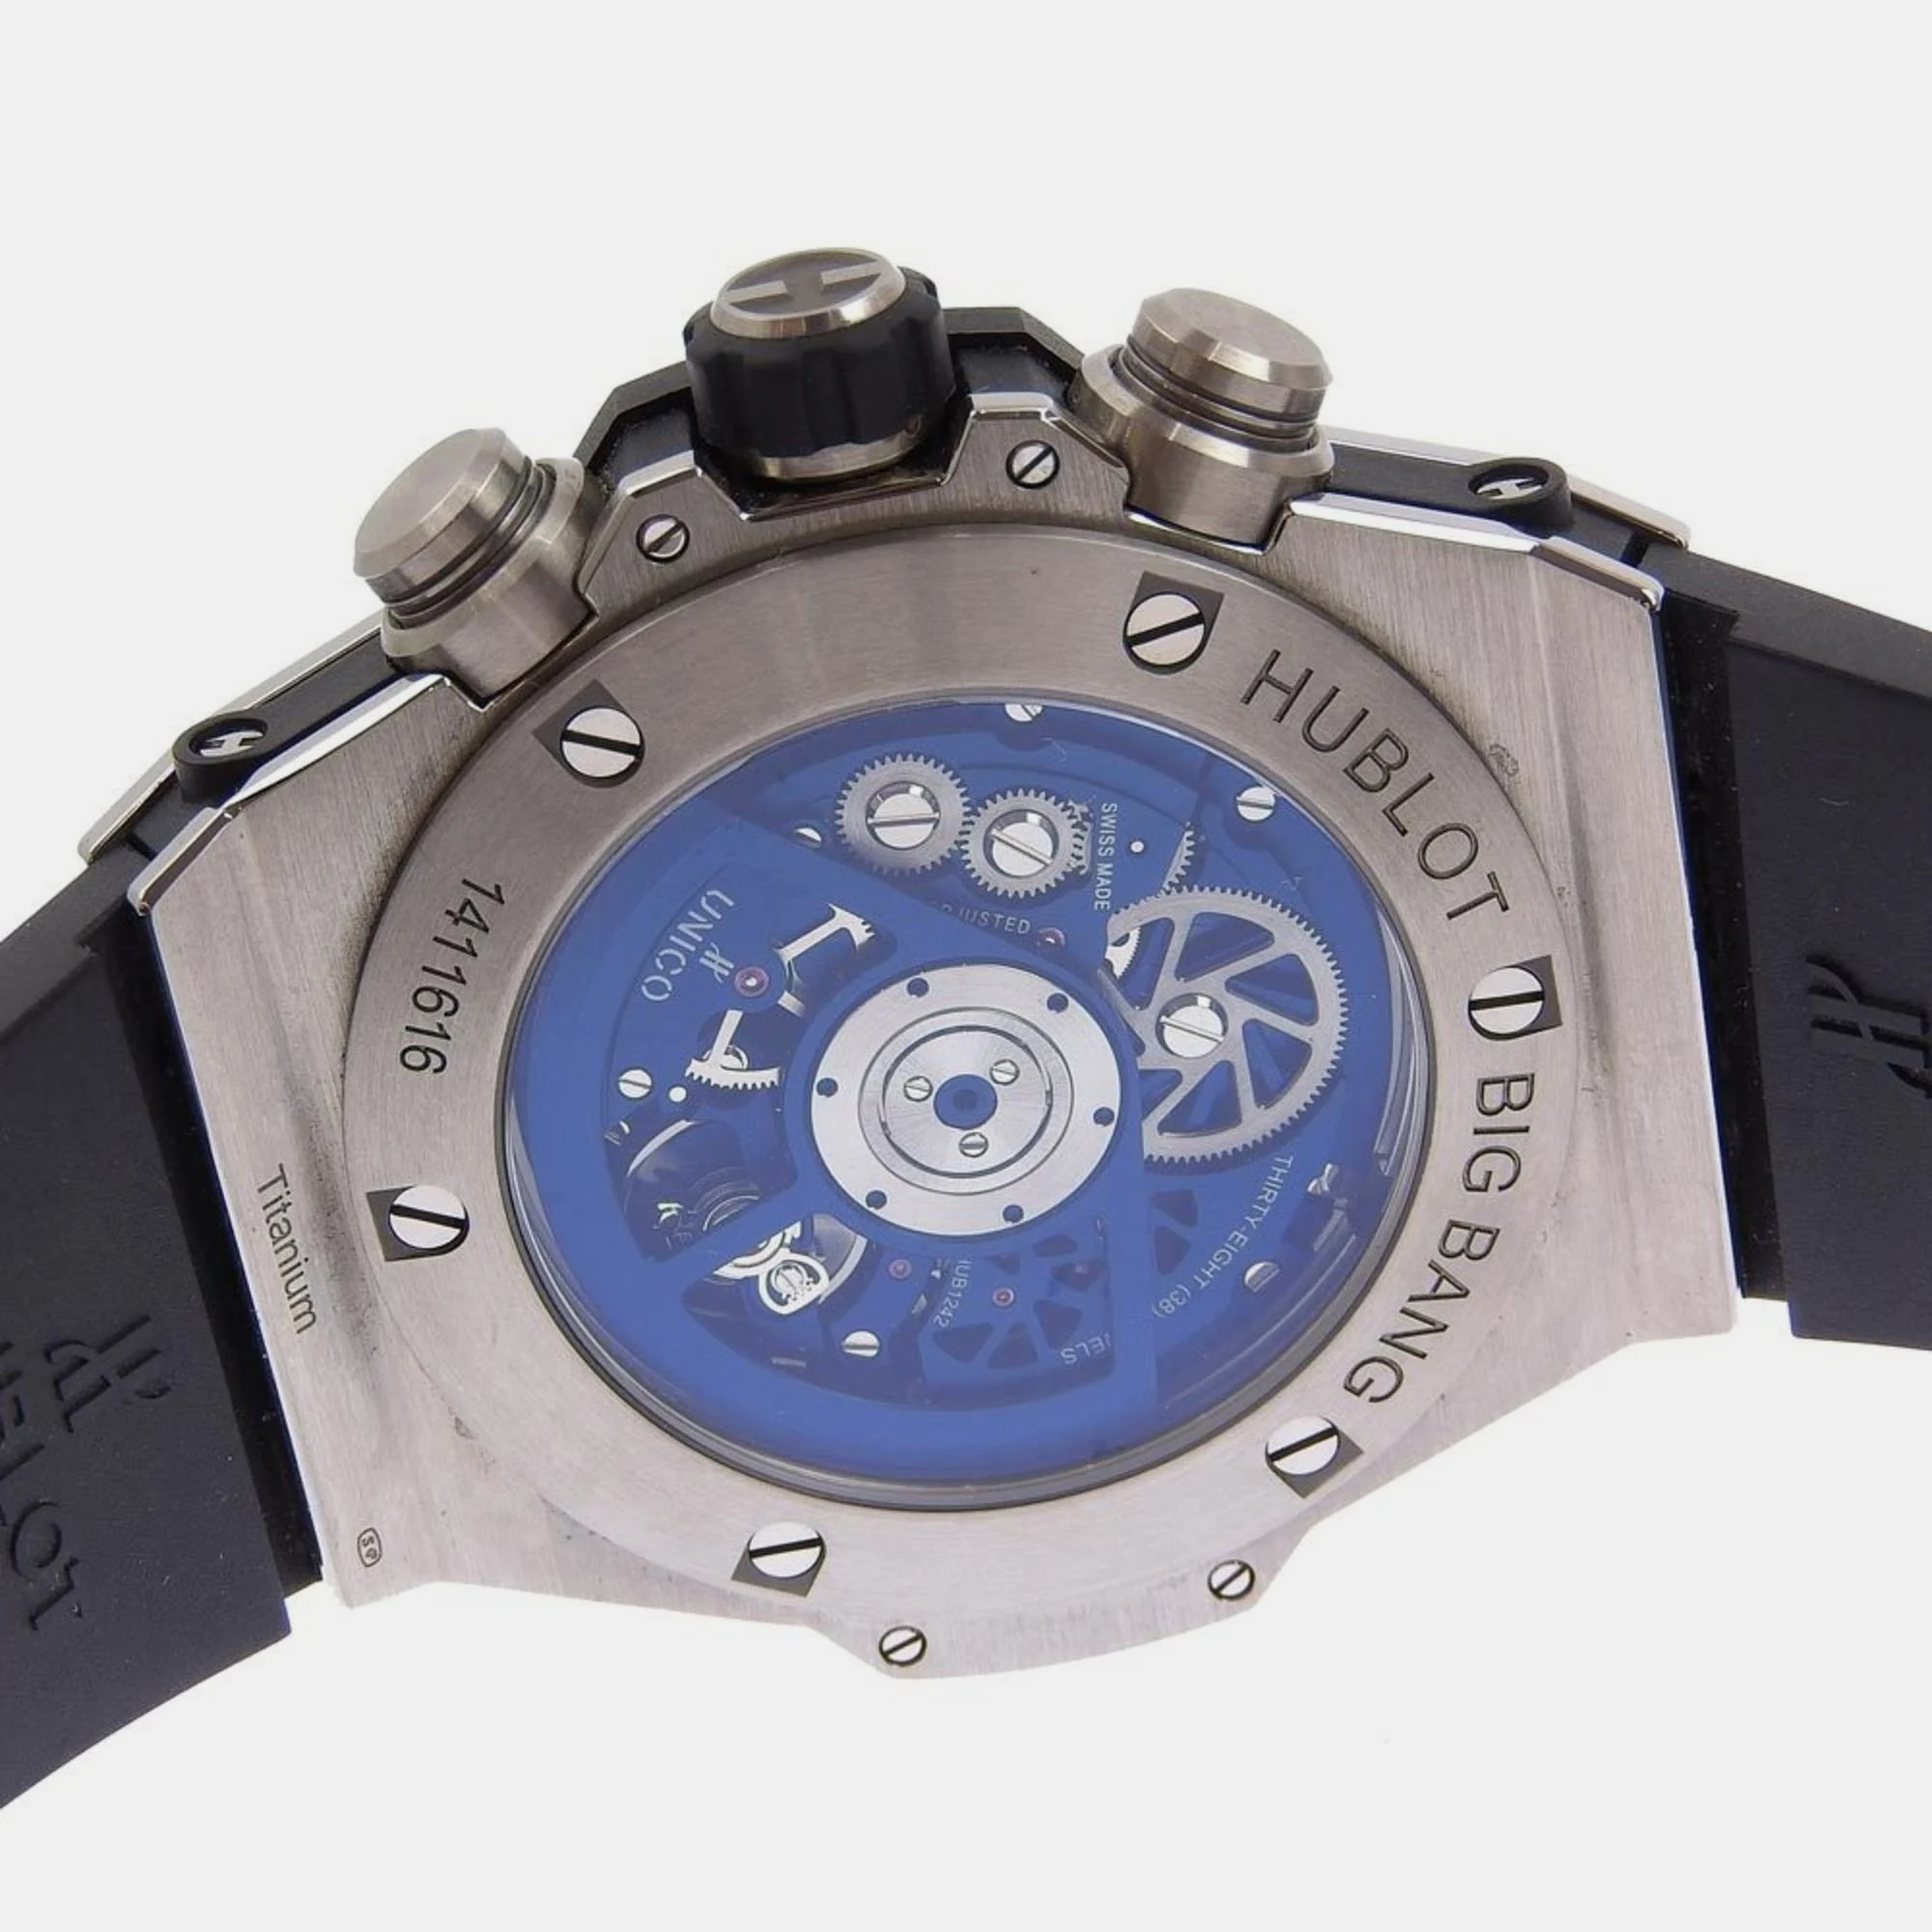 Hublot Blue Stainless Steel Big Bang 411.NX.5179.RX Automatic Chronograph Men's Wristwatch 48 Mm